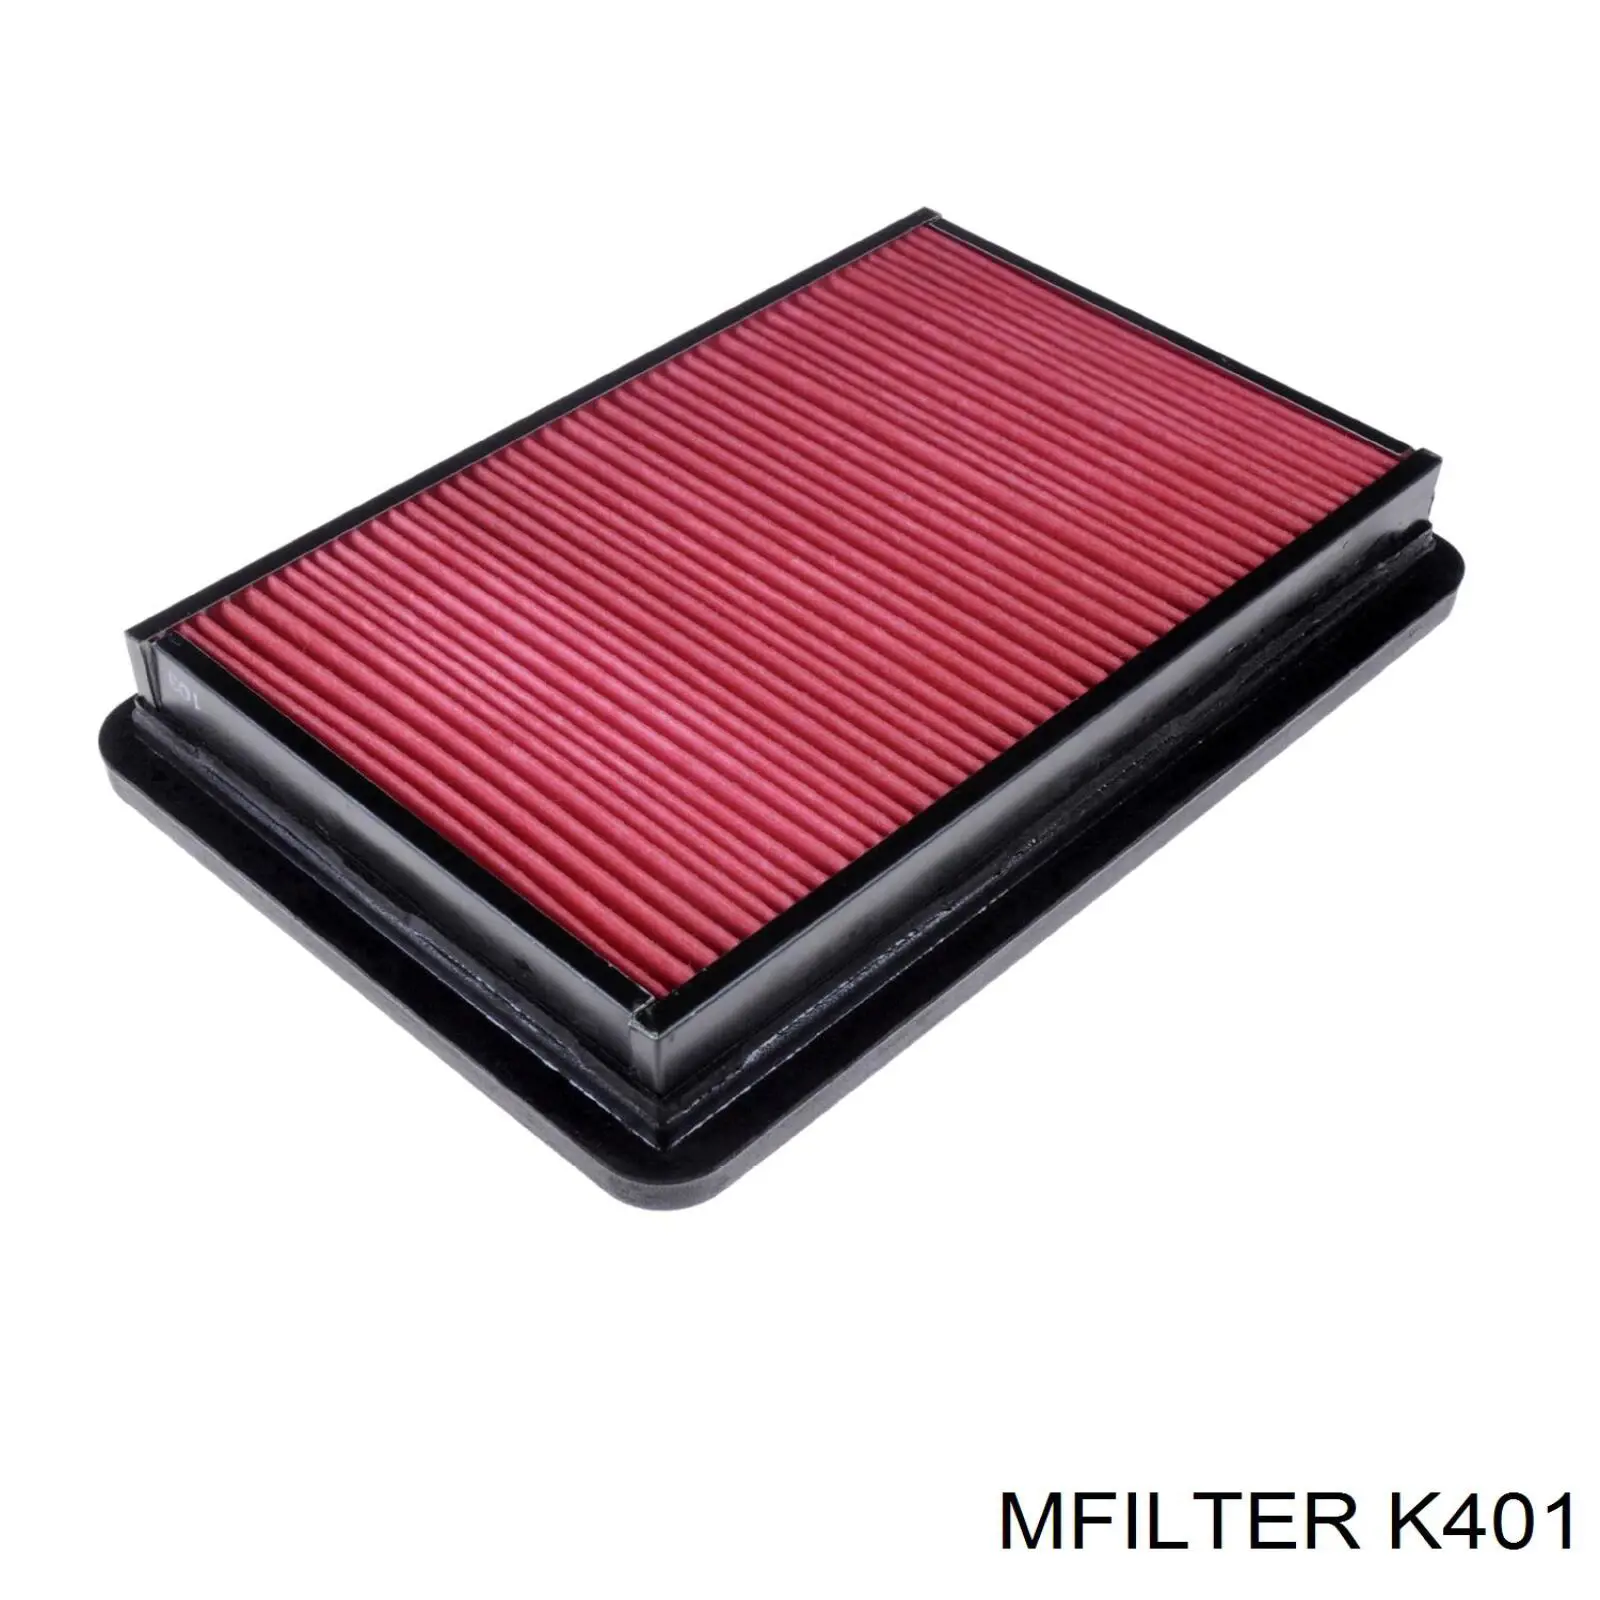 K 401 Mfilter filtro de aire